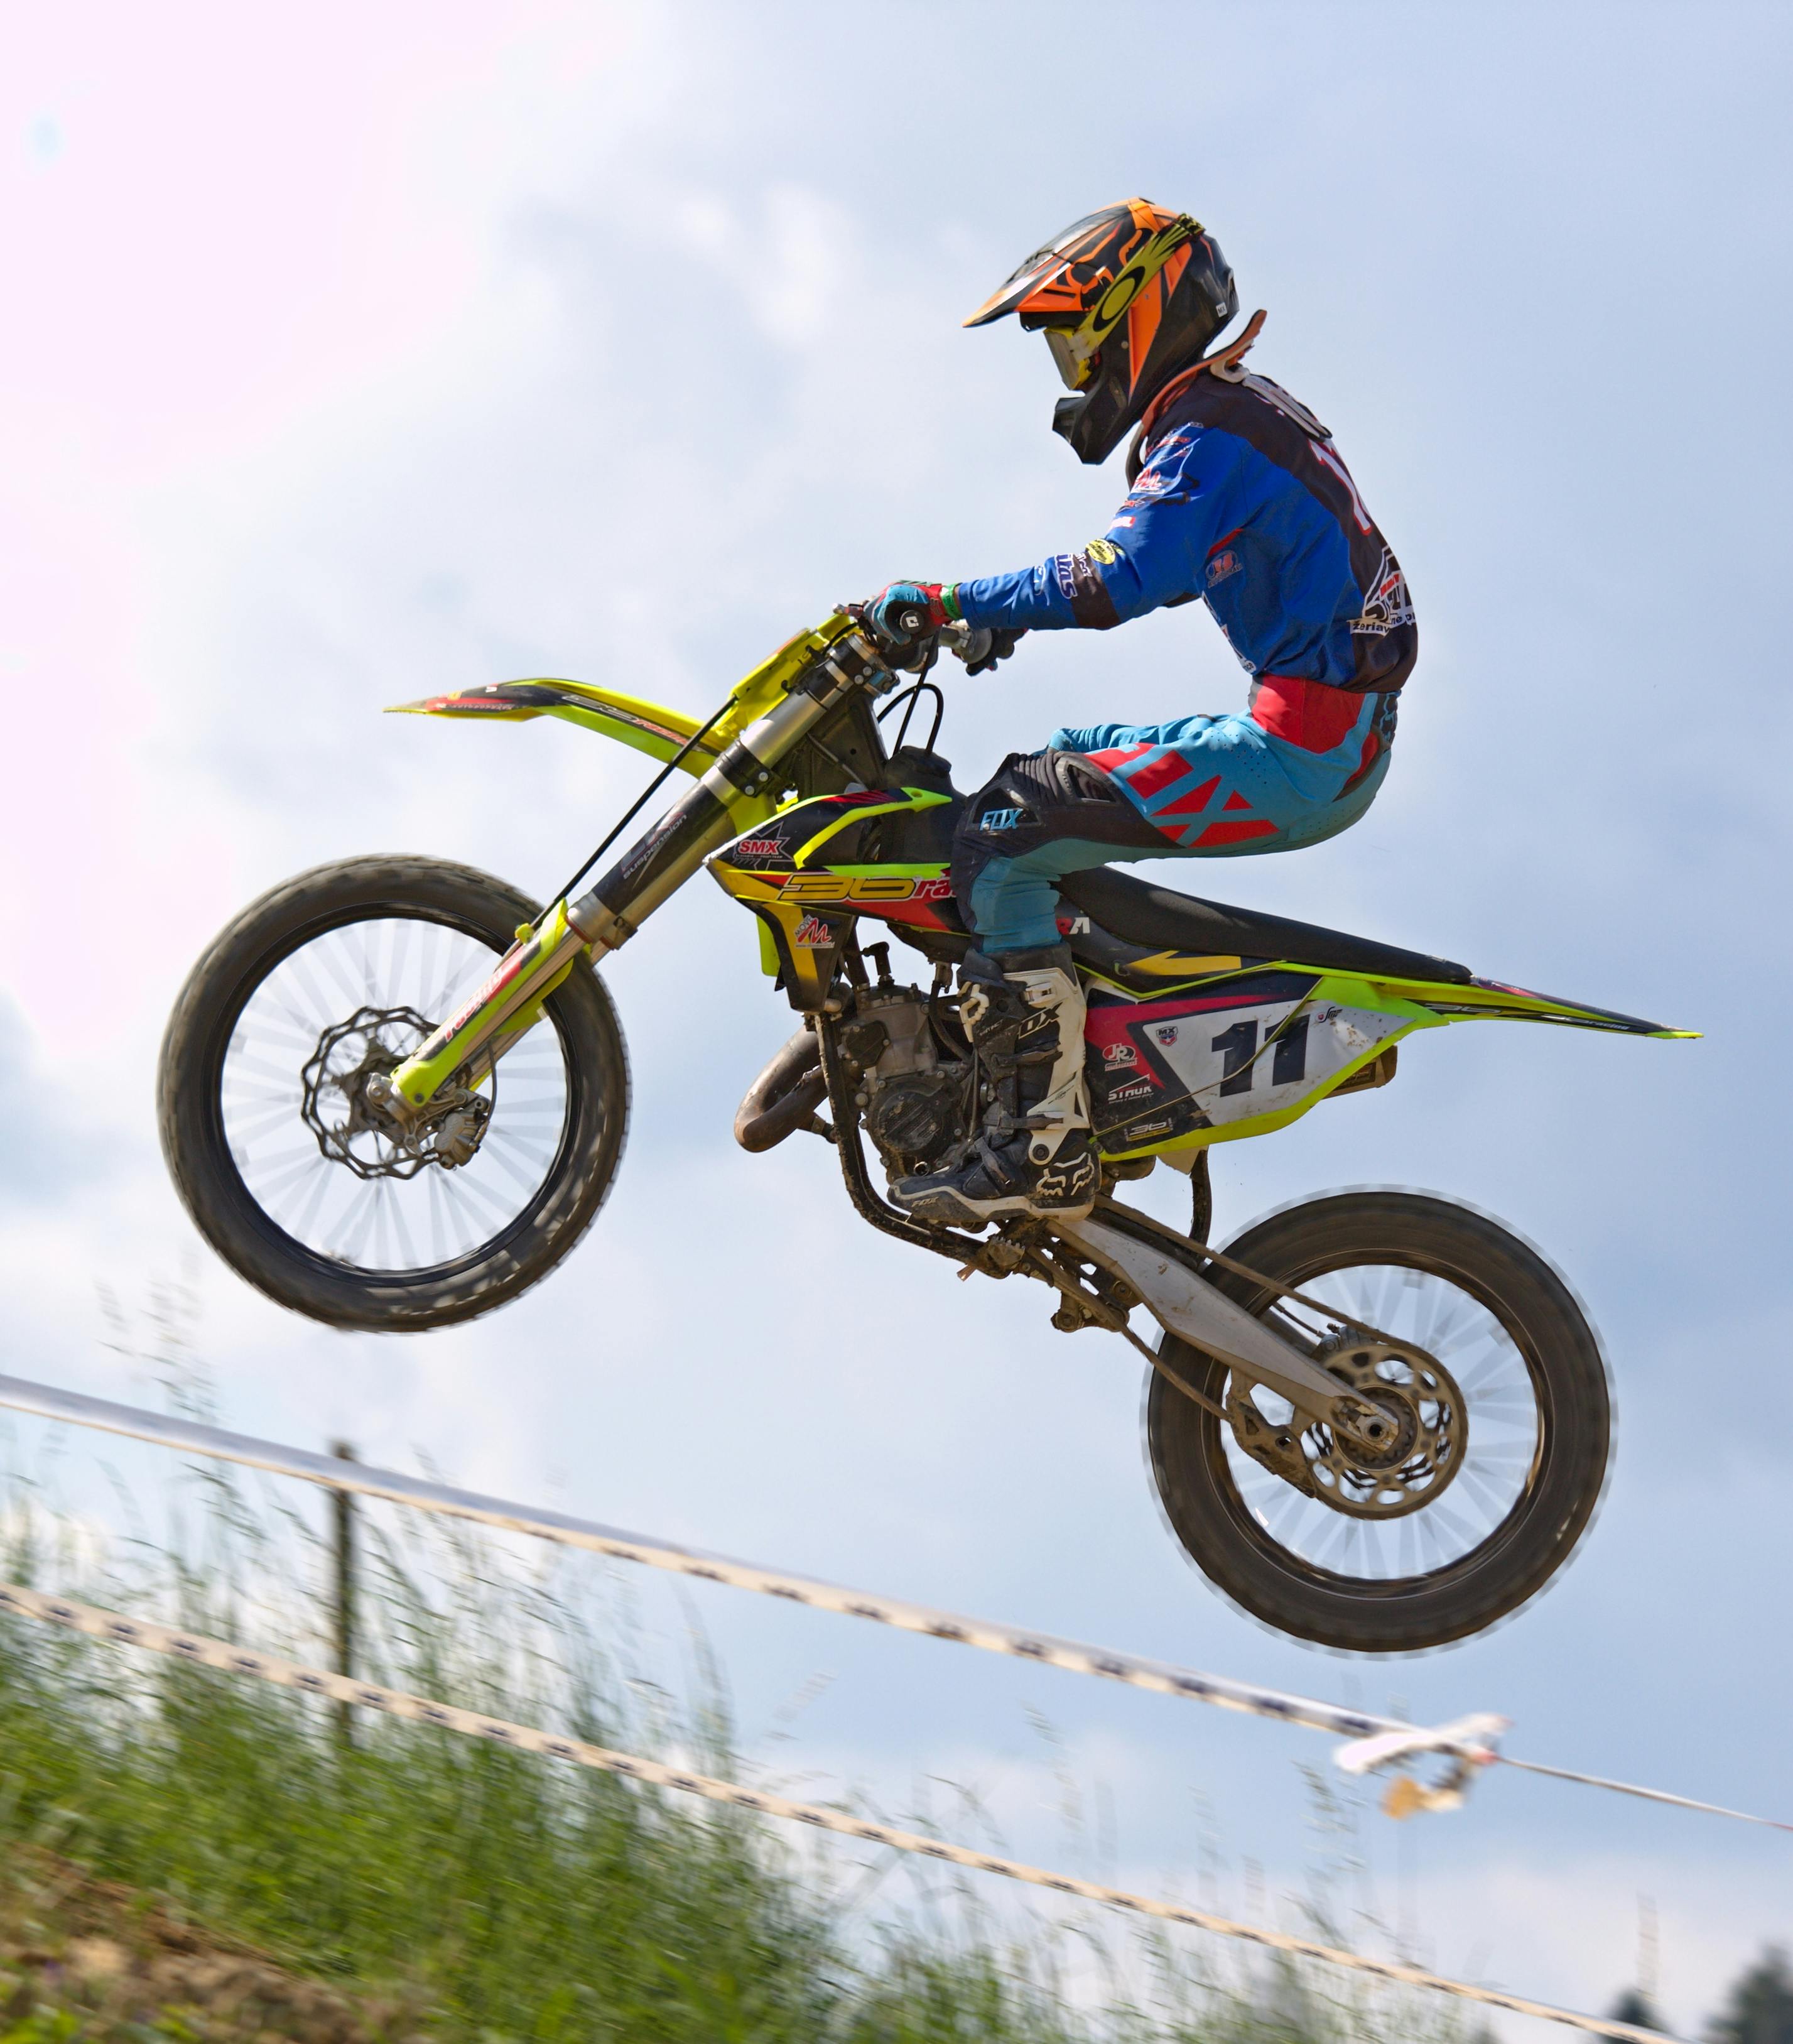 Person Doing Stunt in Motocross Dirt Bike · Free Stock Photo